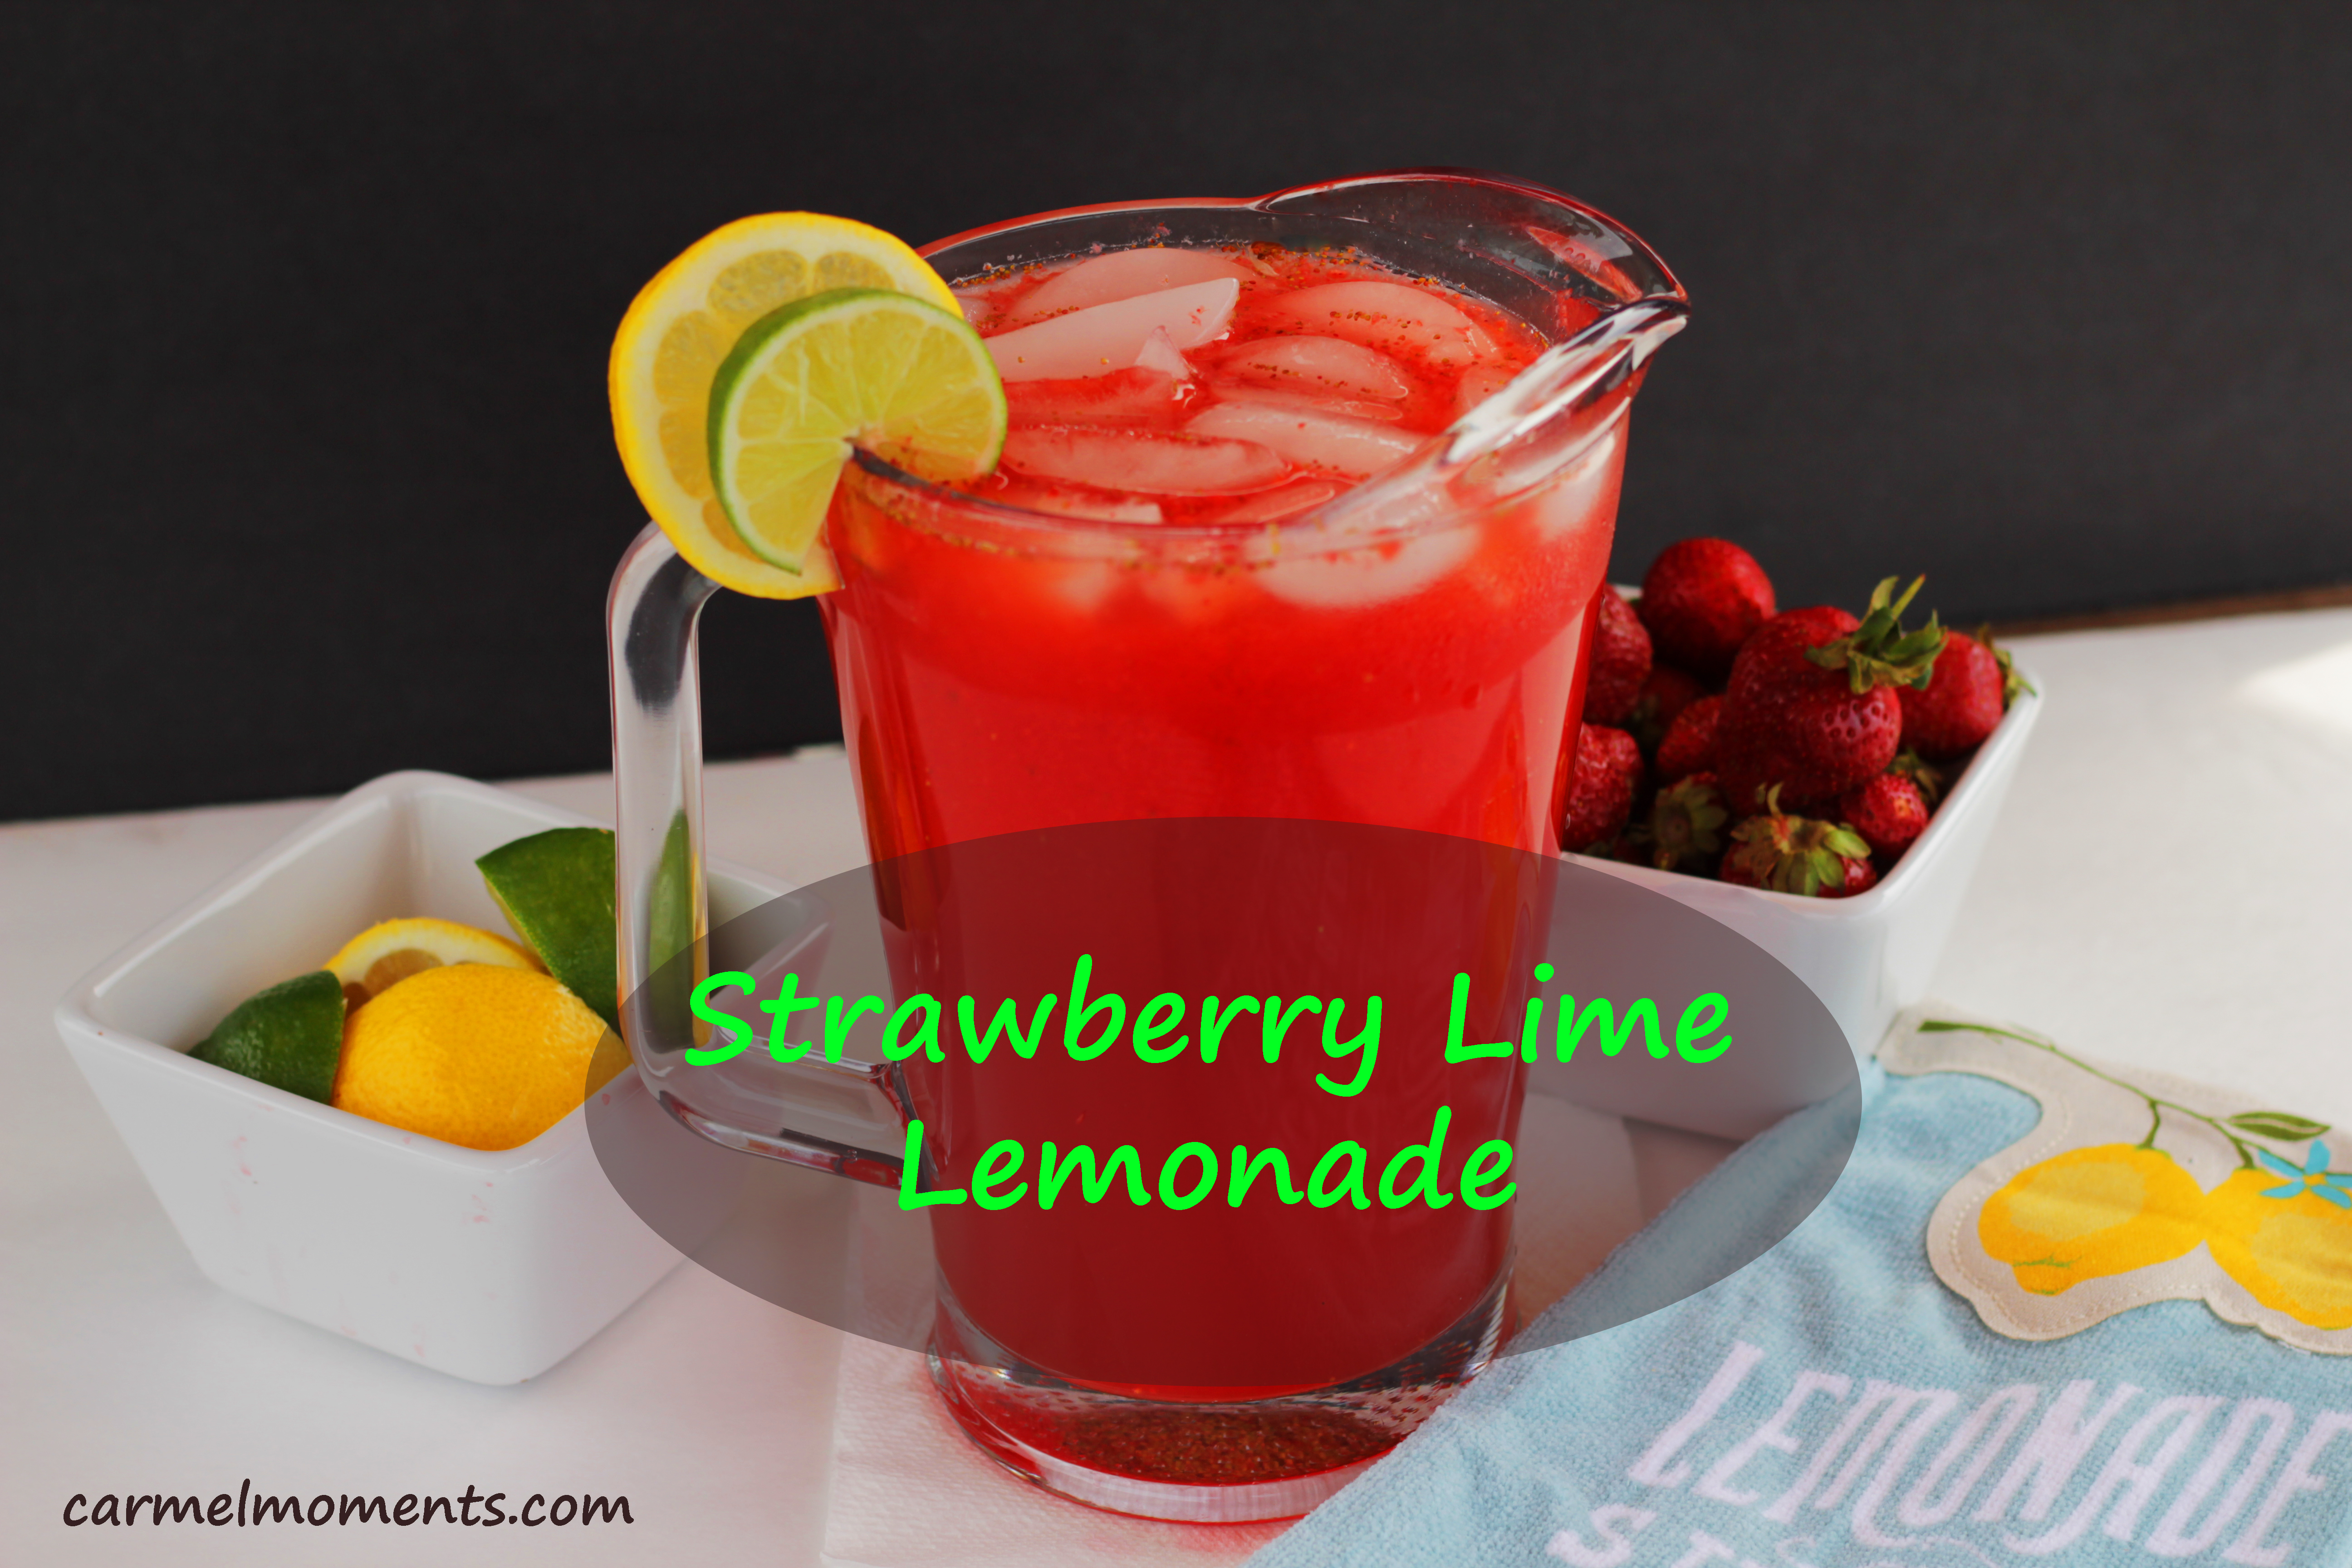 Strawberry Lime Lemonade